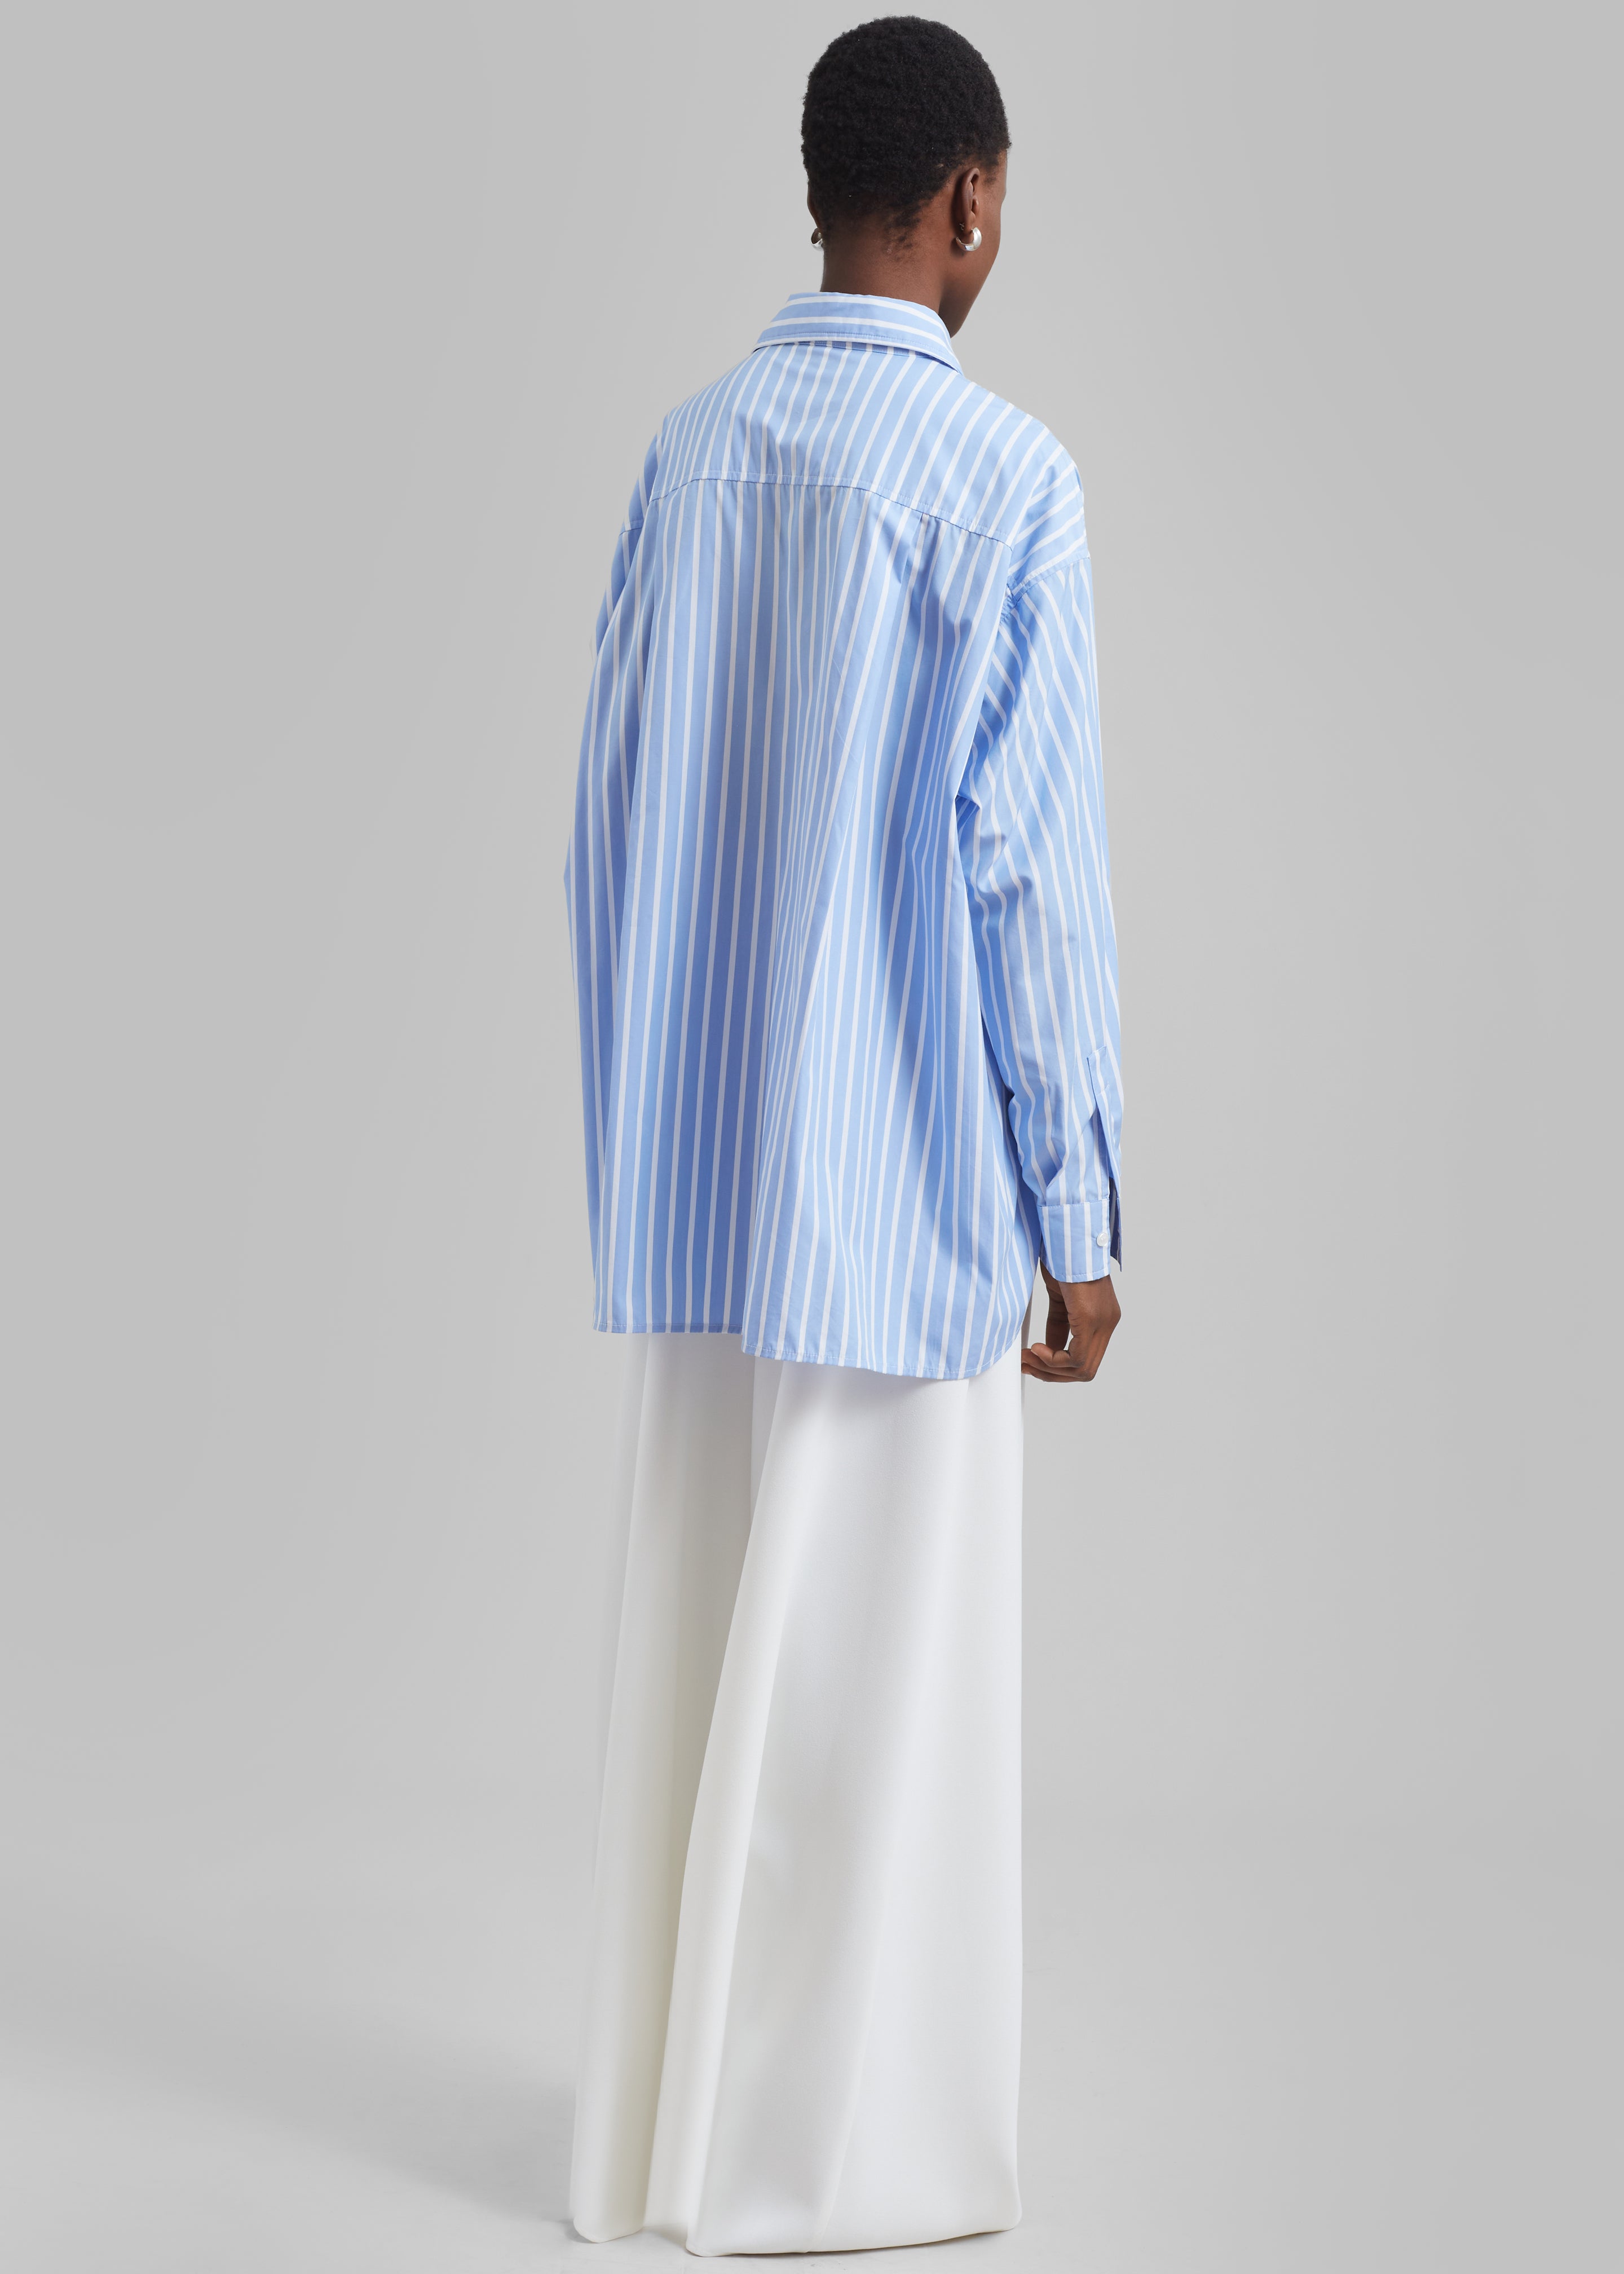 Georgia Boxy Shirt - Sky Blue/White Stripe - 9